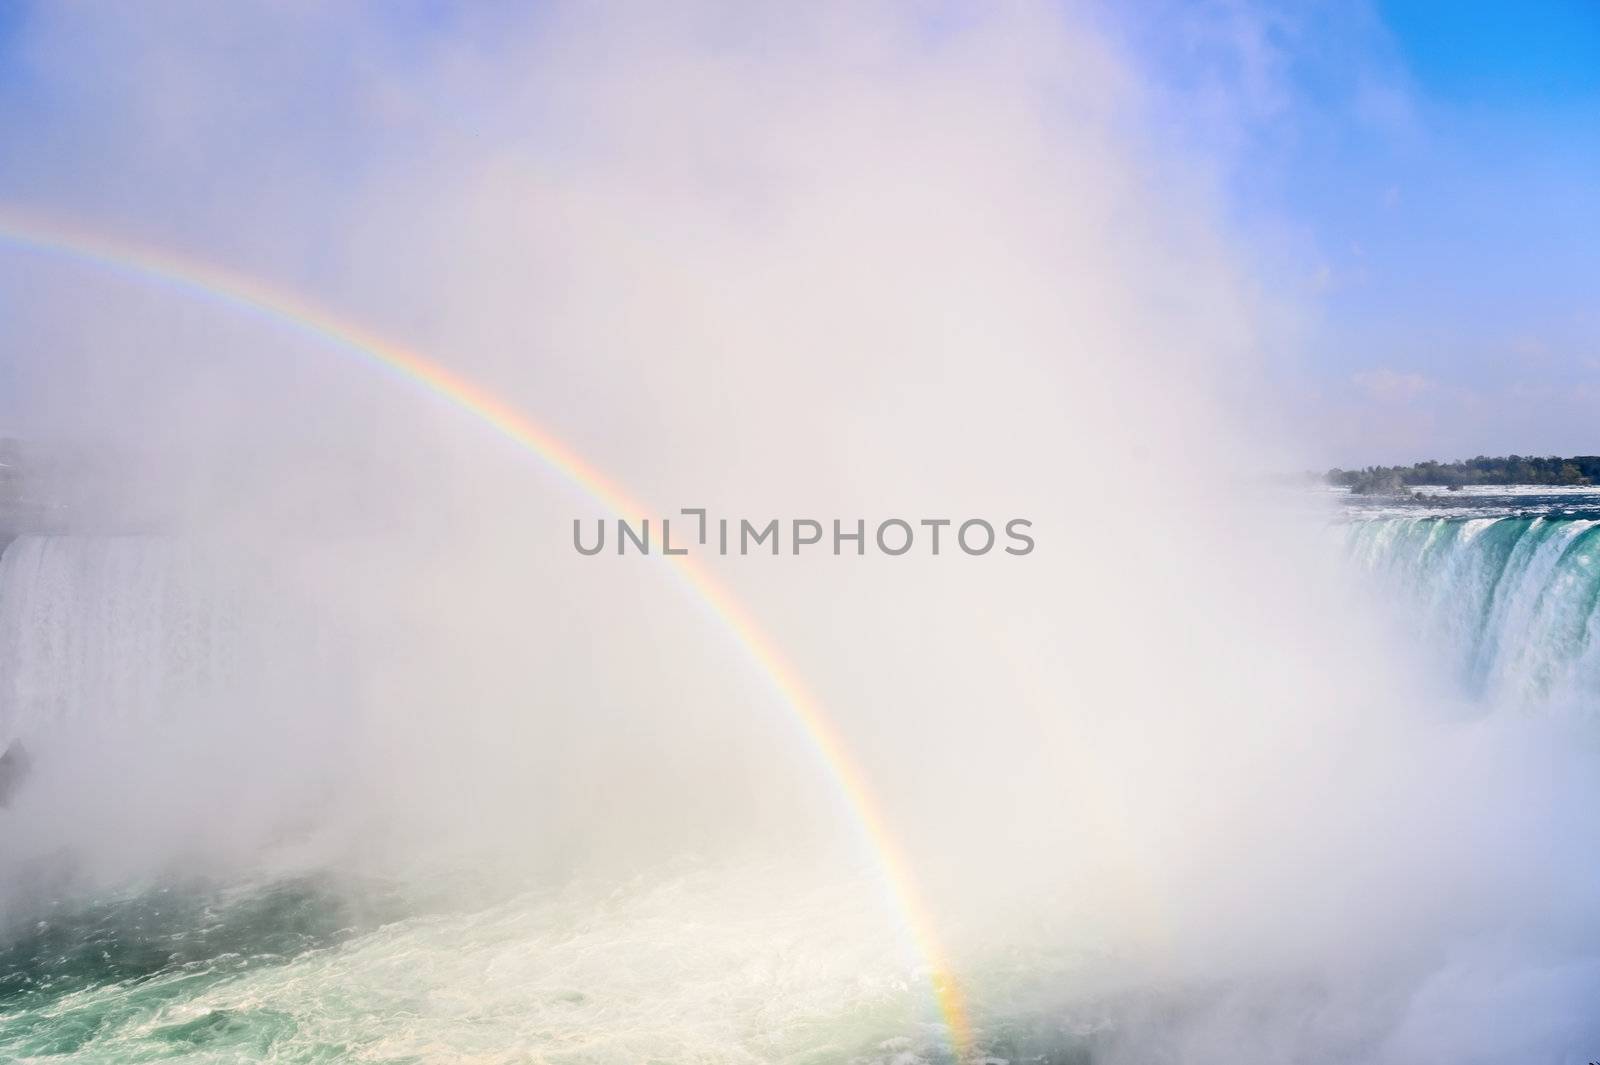 Rainbow Rises from Niagara Falls by Marcus